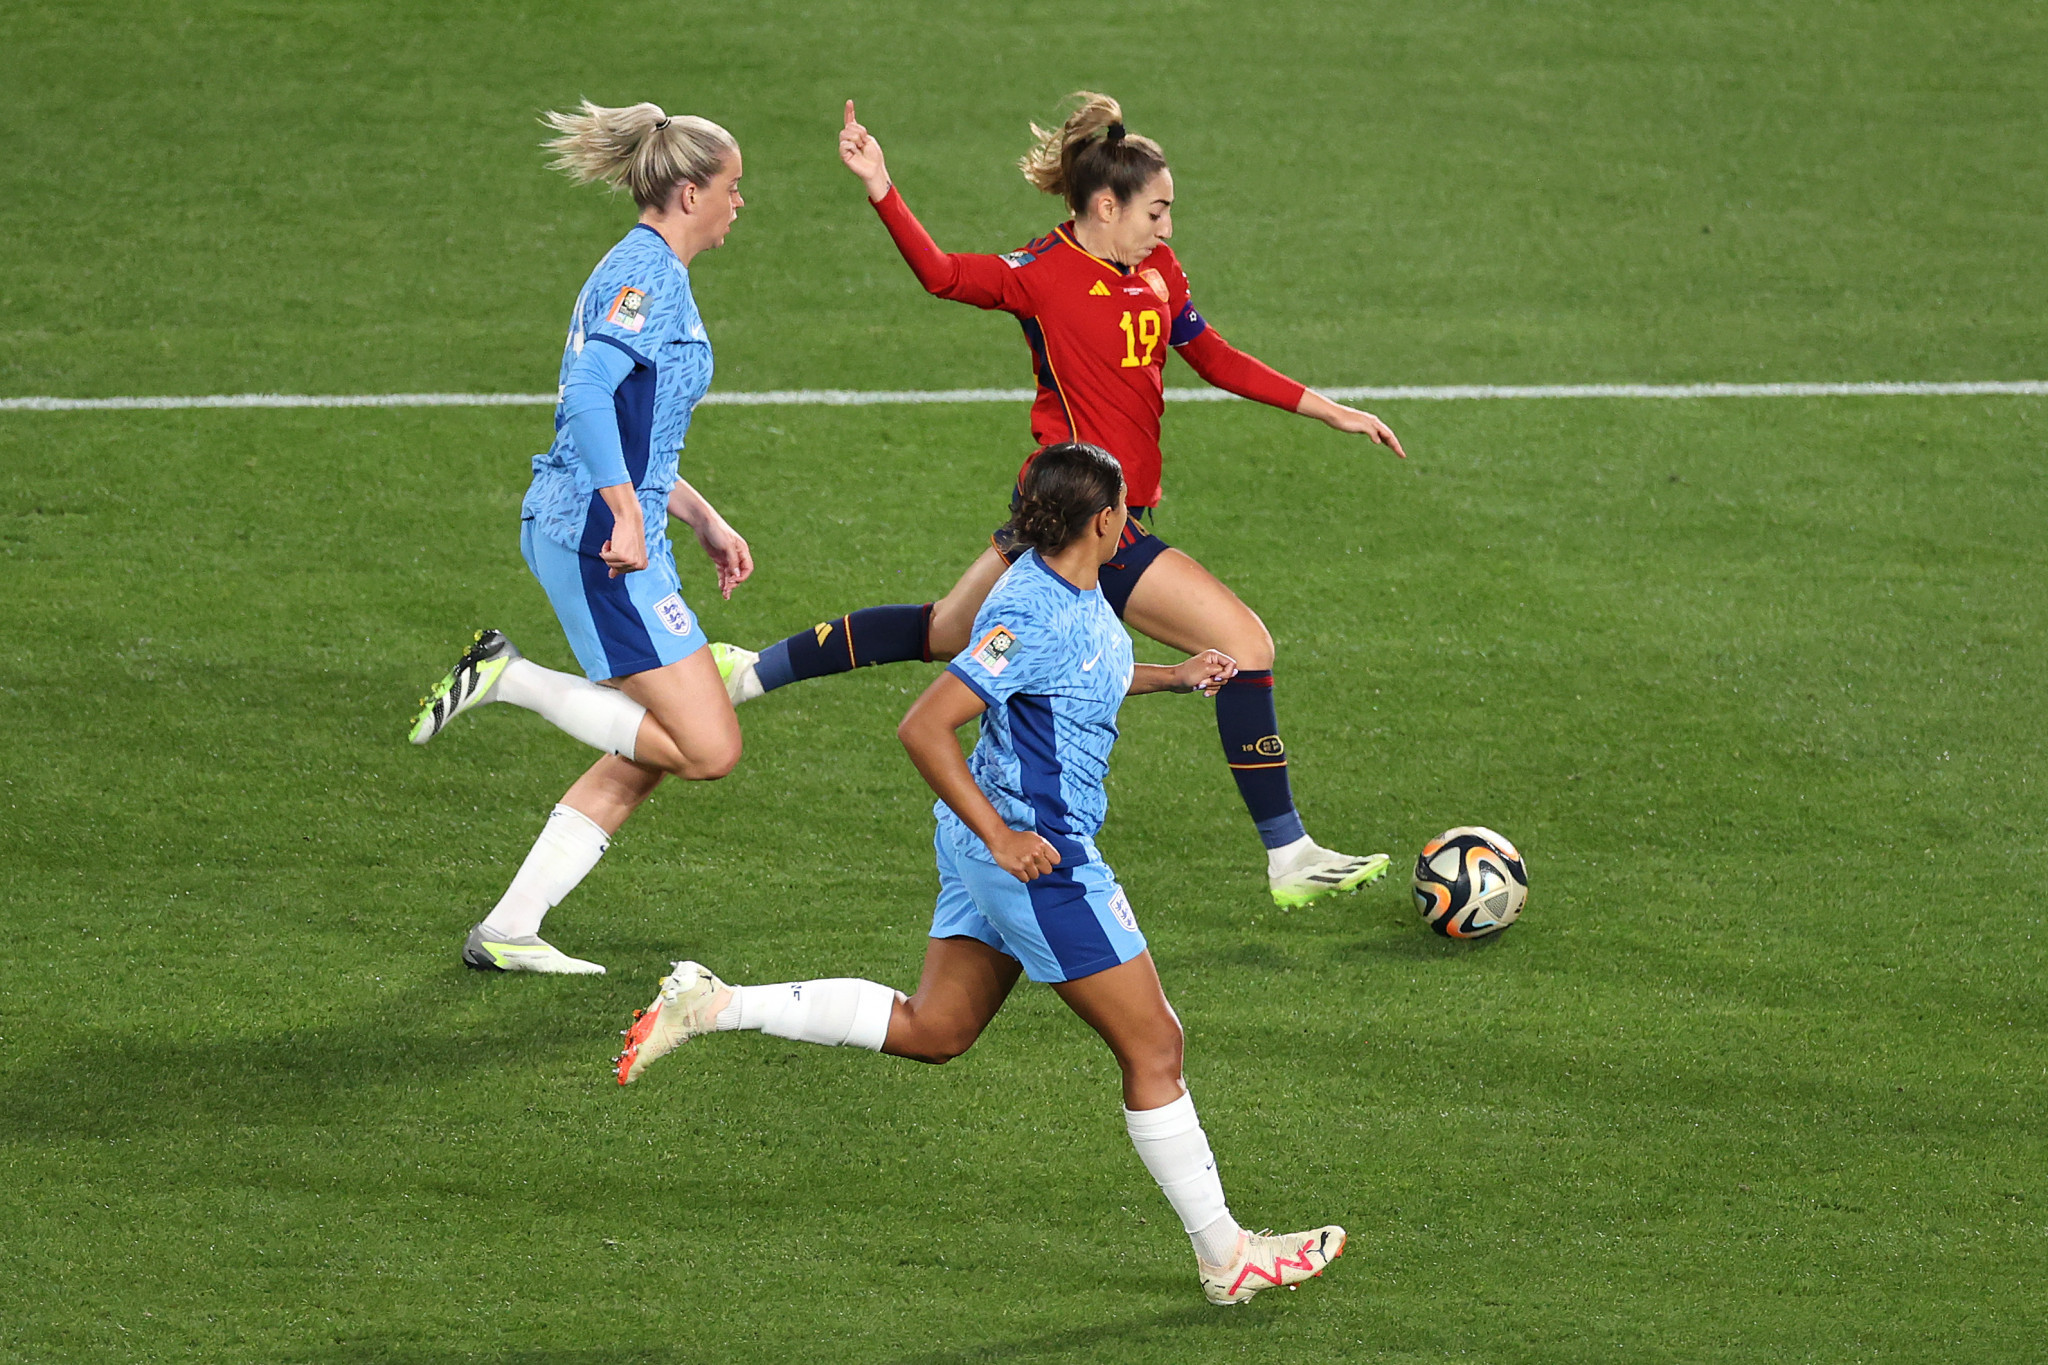 Spain captain Carmona nets winner to clinch FIFA Women's World Cup